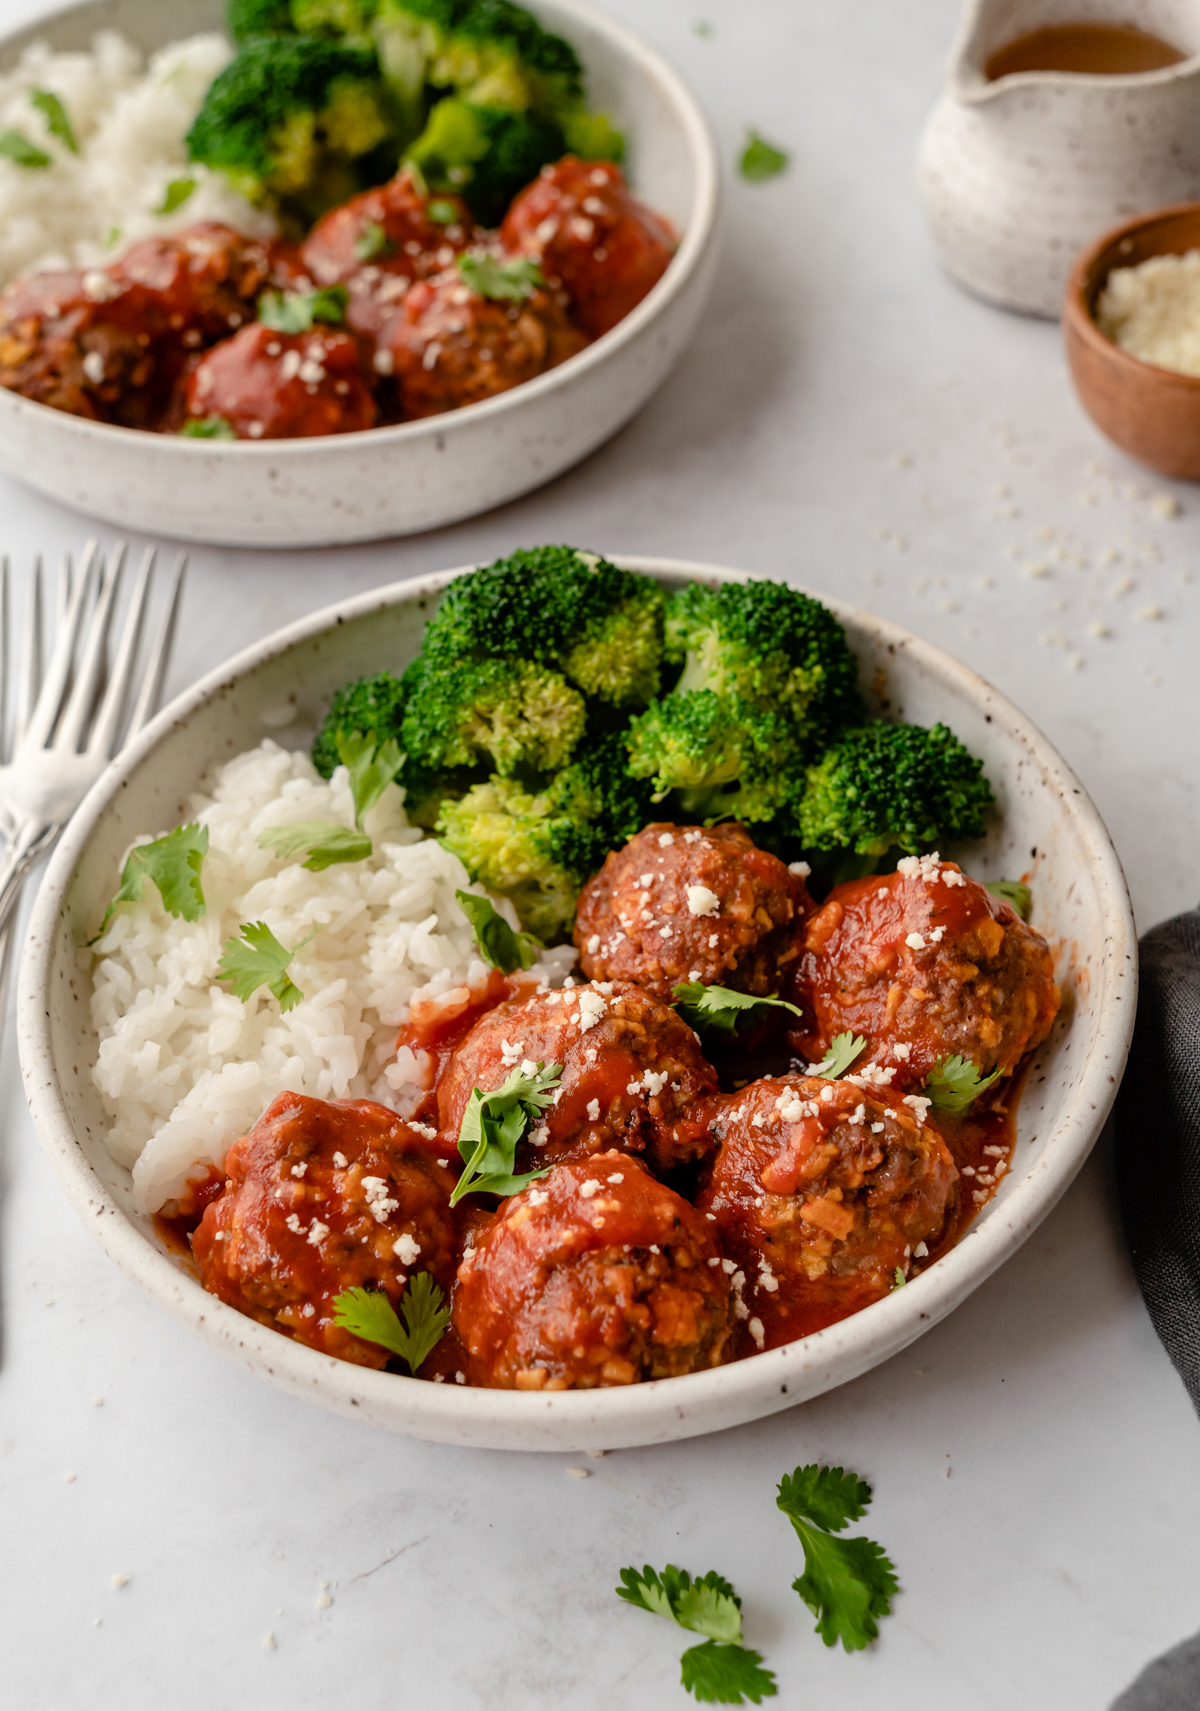 Bowl of meatballs, rice, and broccoli